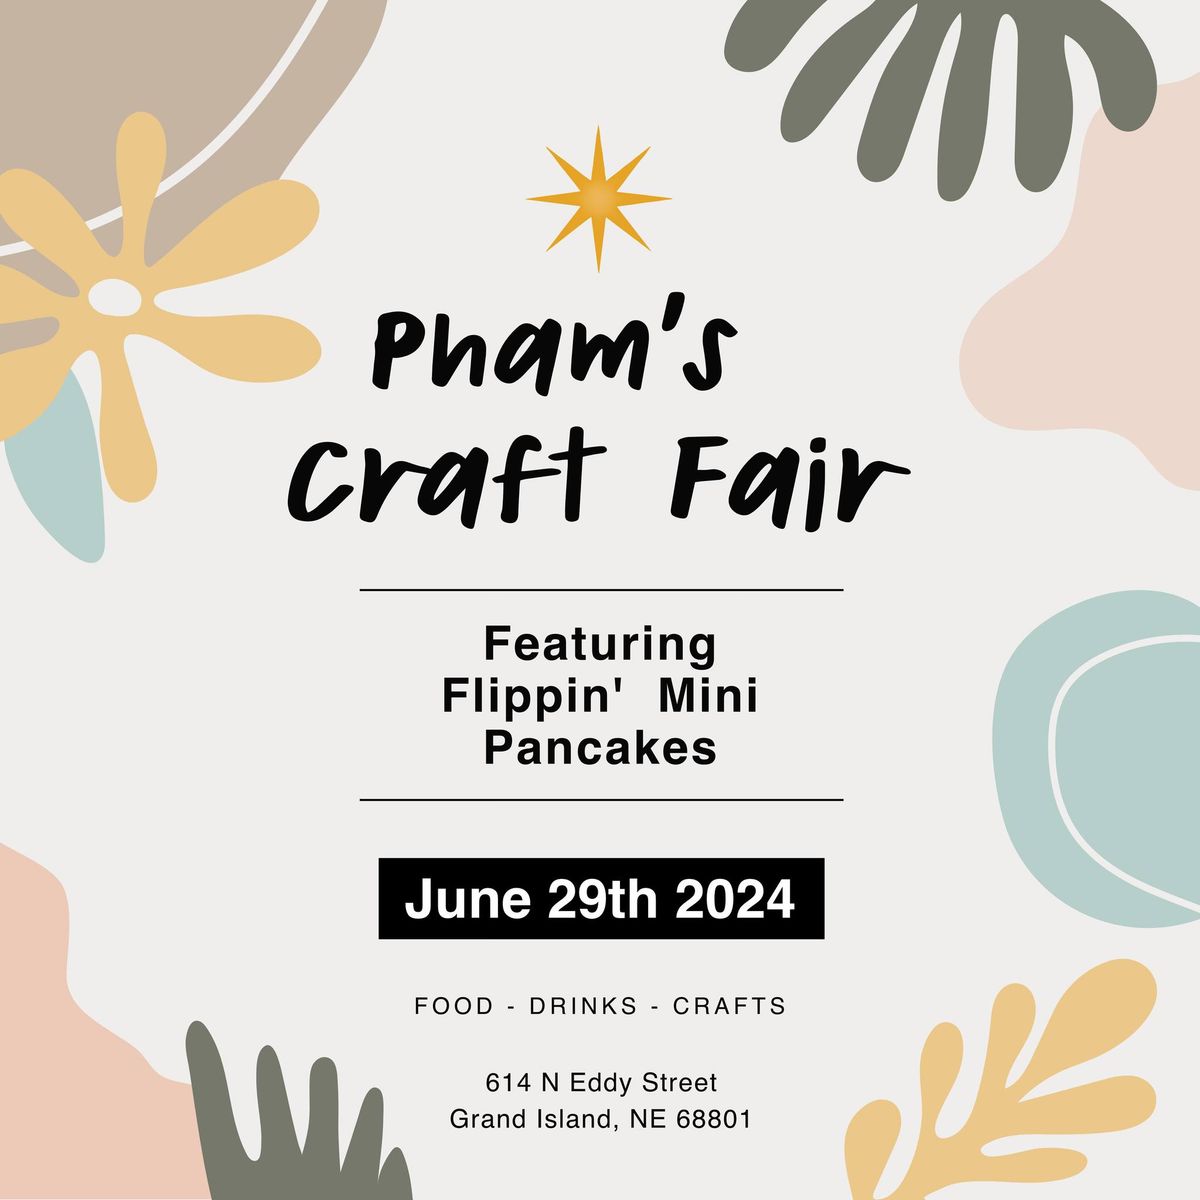 Pham's Craft Fair